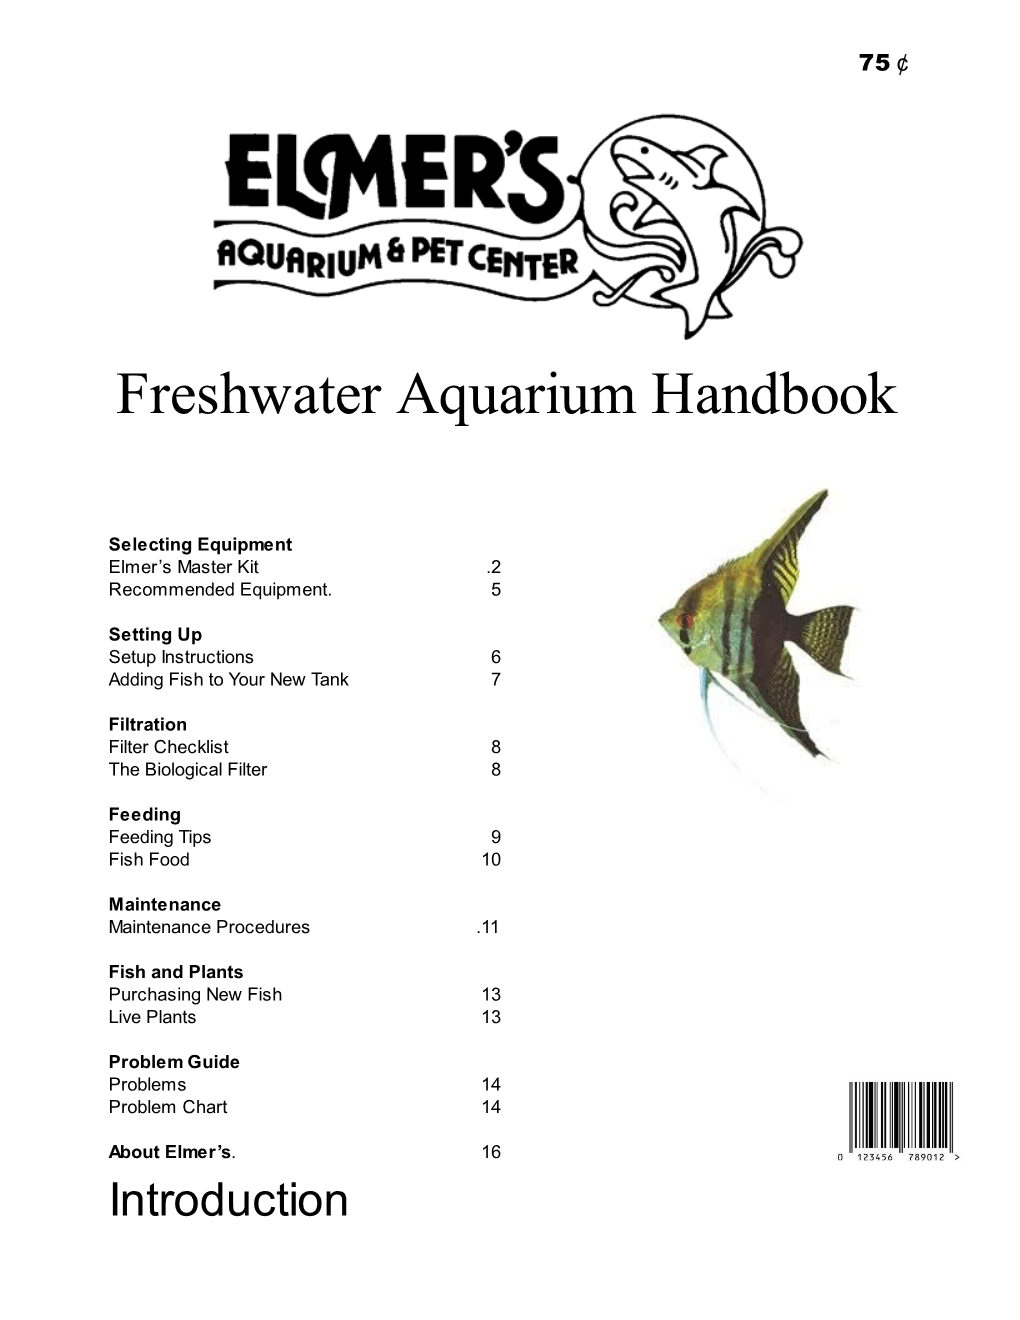 Elmer's Freshwater Handbook